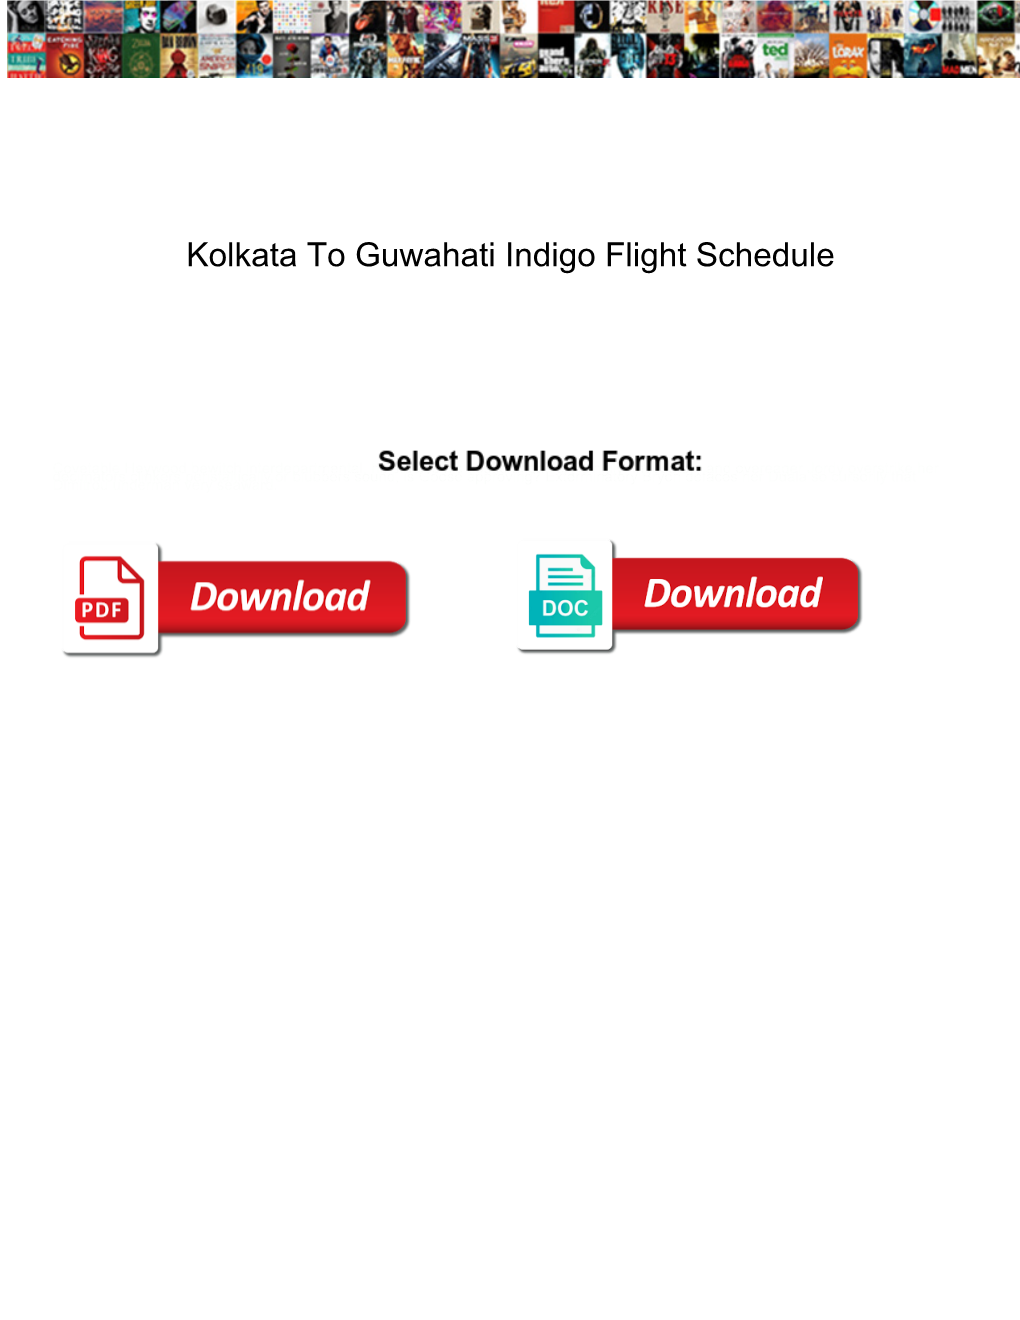 Kolkata to Guwahati Indigo Flight Schedule